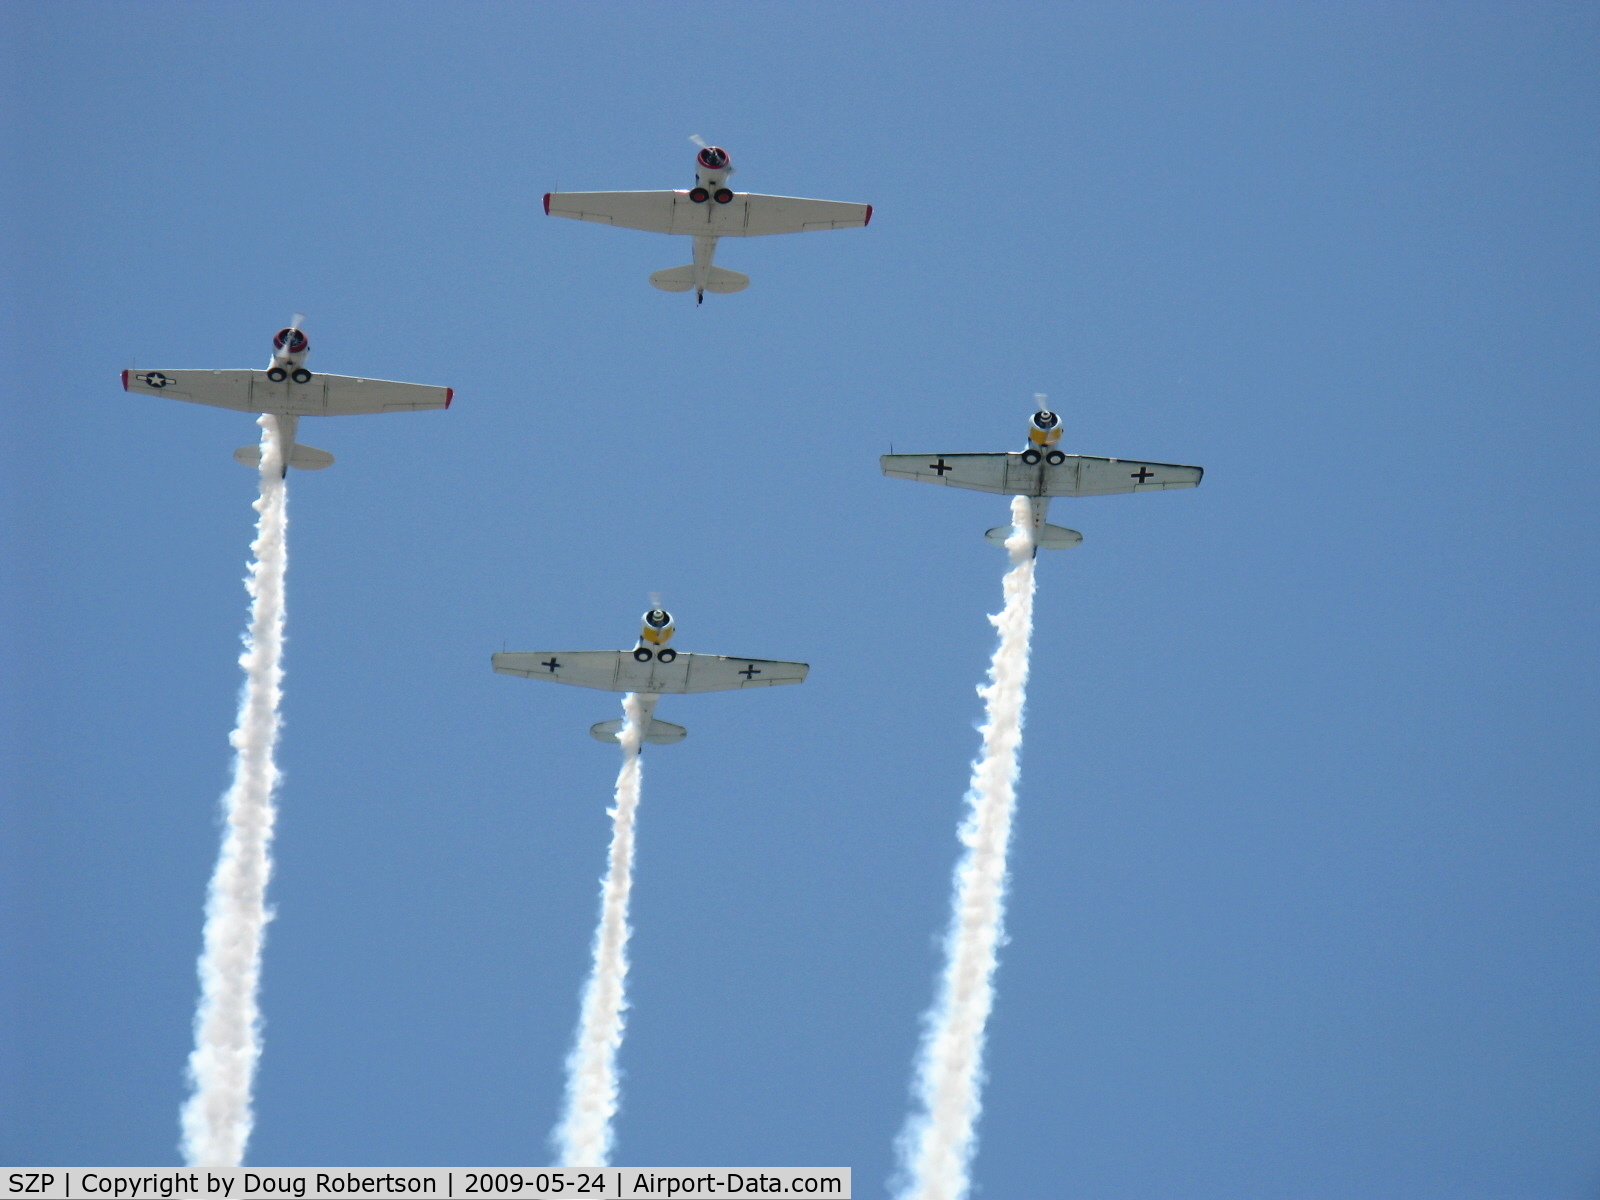 Santa Paula Airport (SZP) - The Condor Squadron in formation preliminary overflight